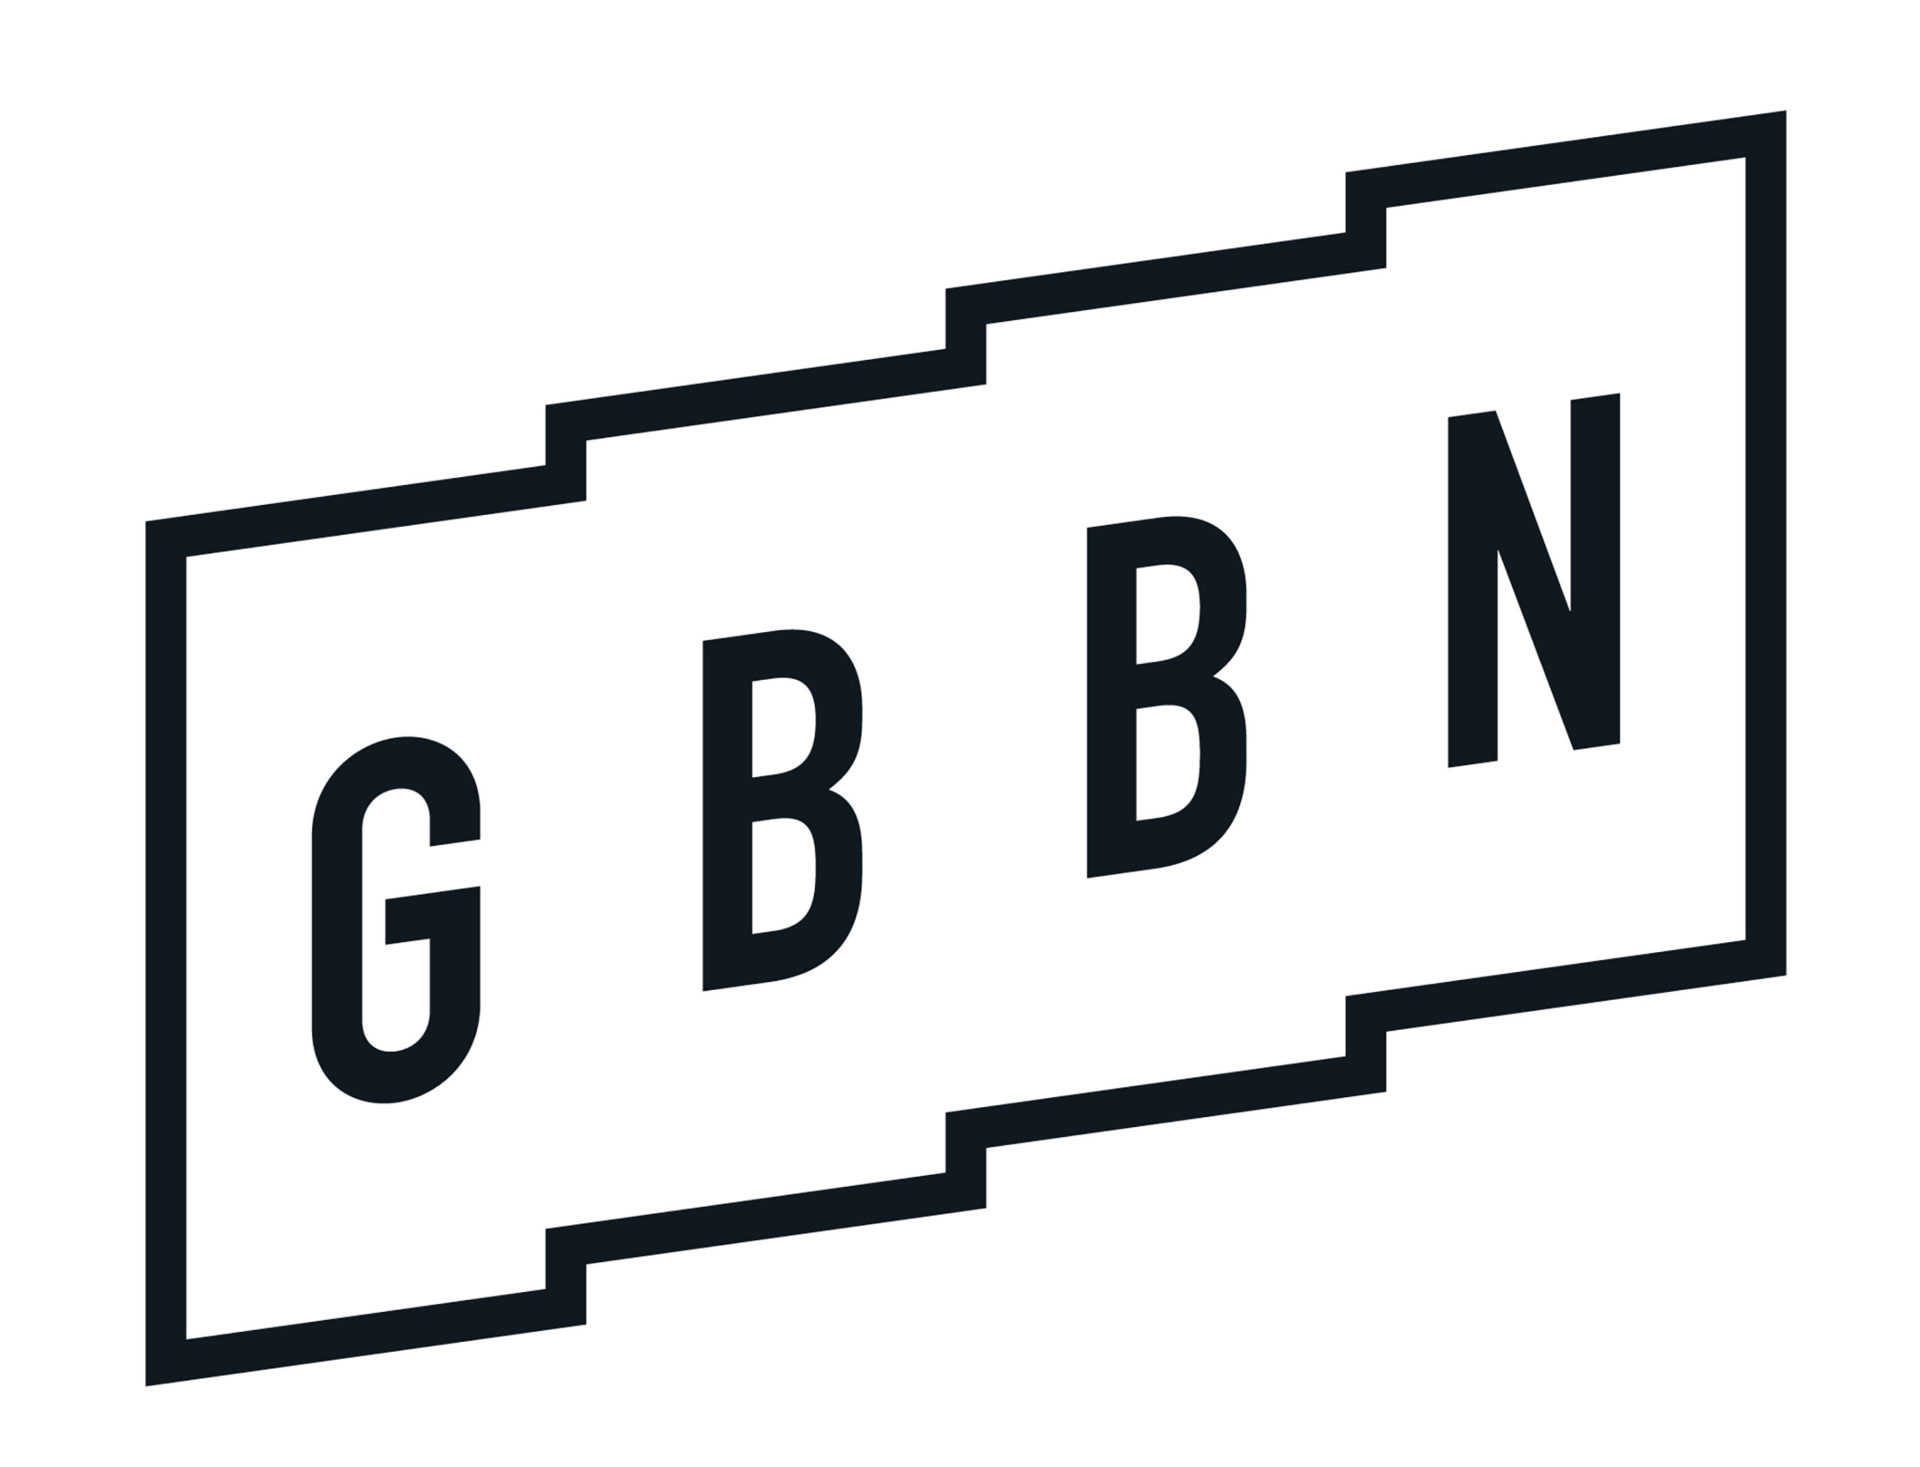 GBBN logo